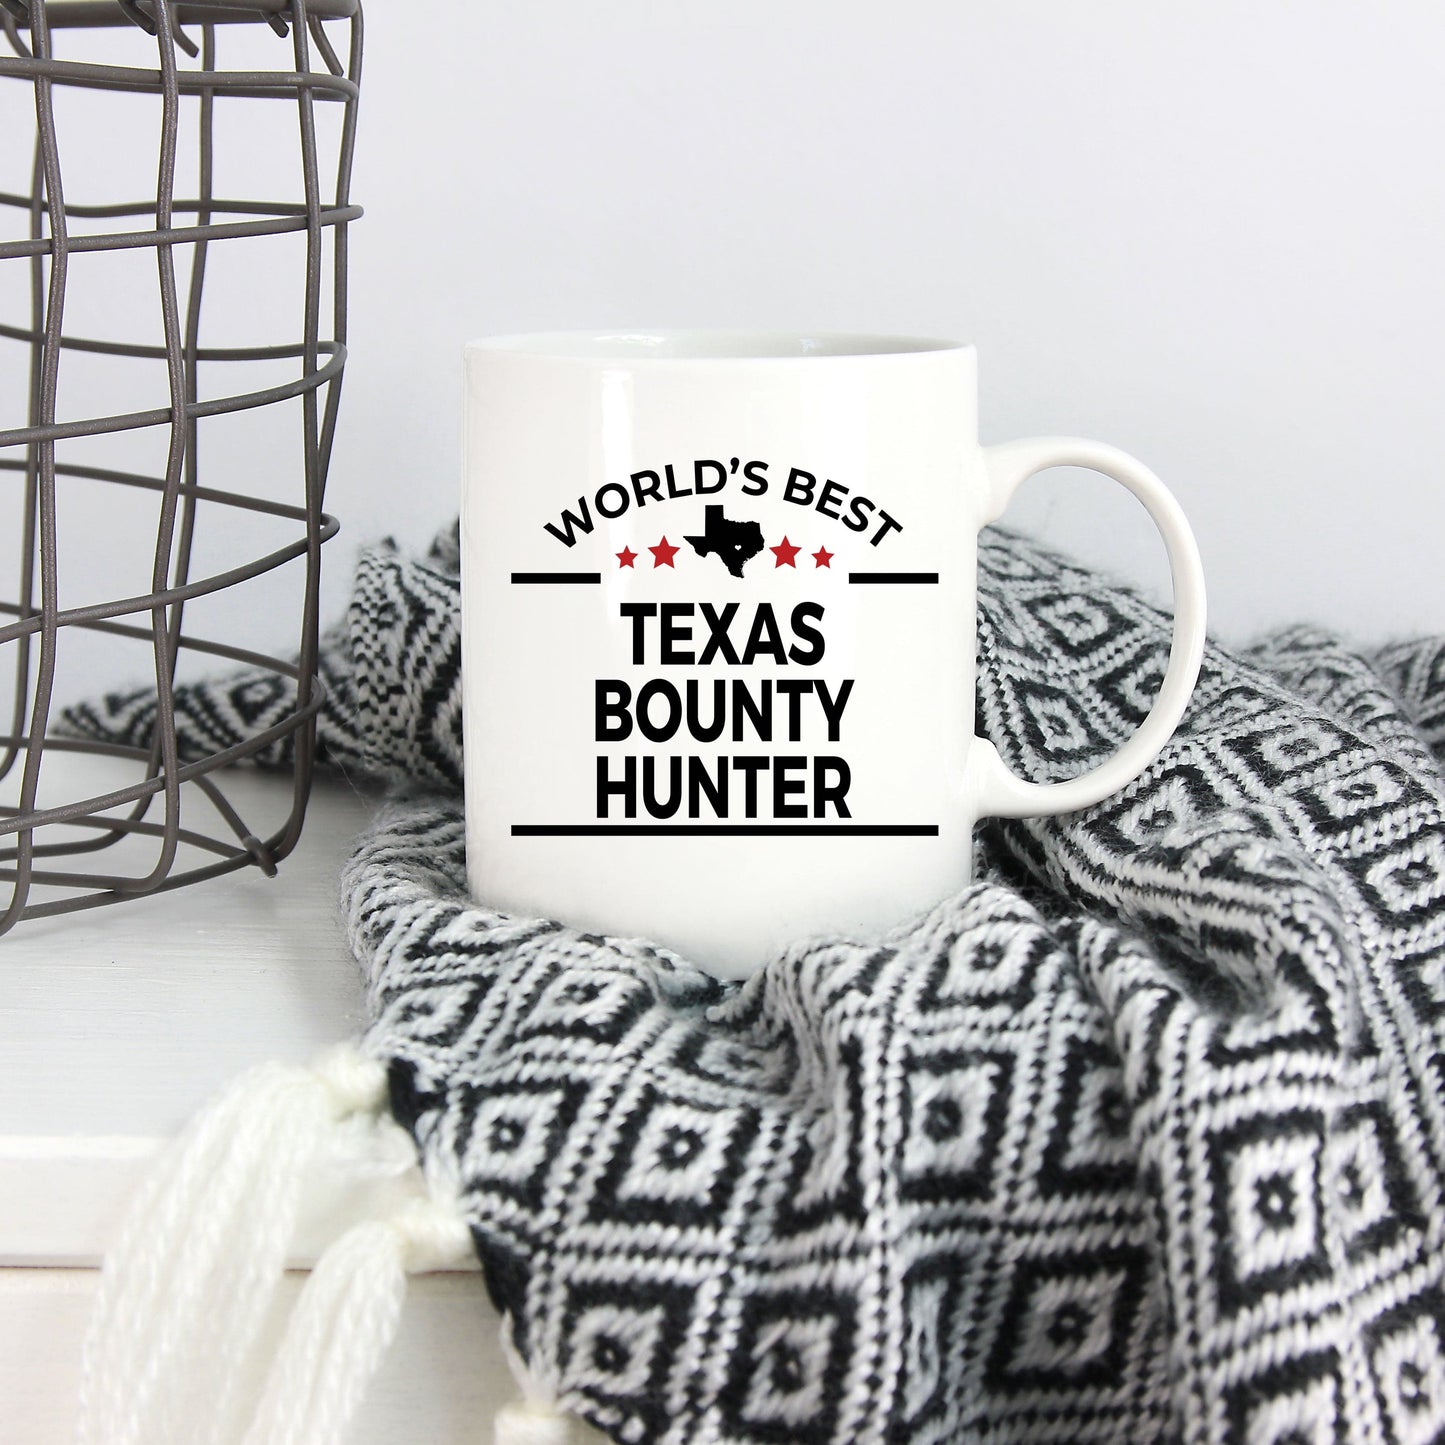 Texas Bounty Hunter Gift Birthday Father's Day White Ceramic Coffee Mug